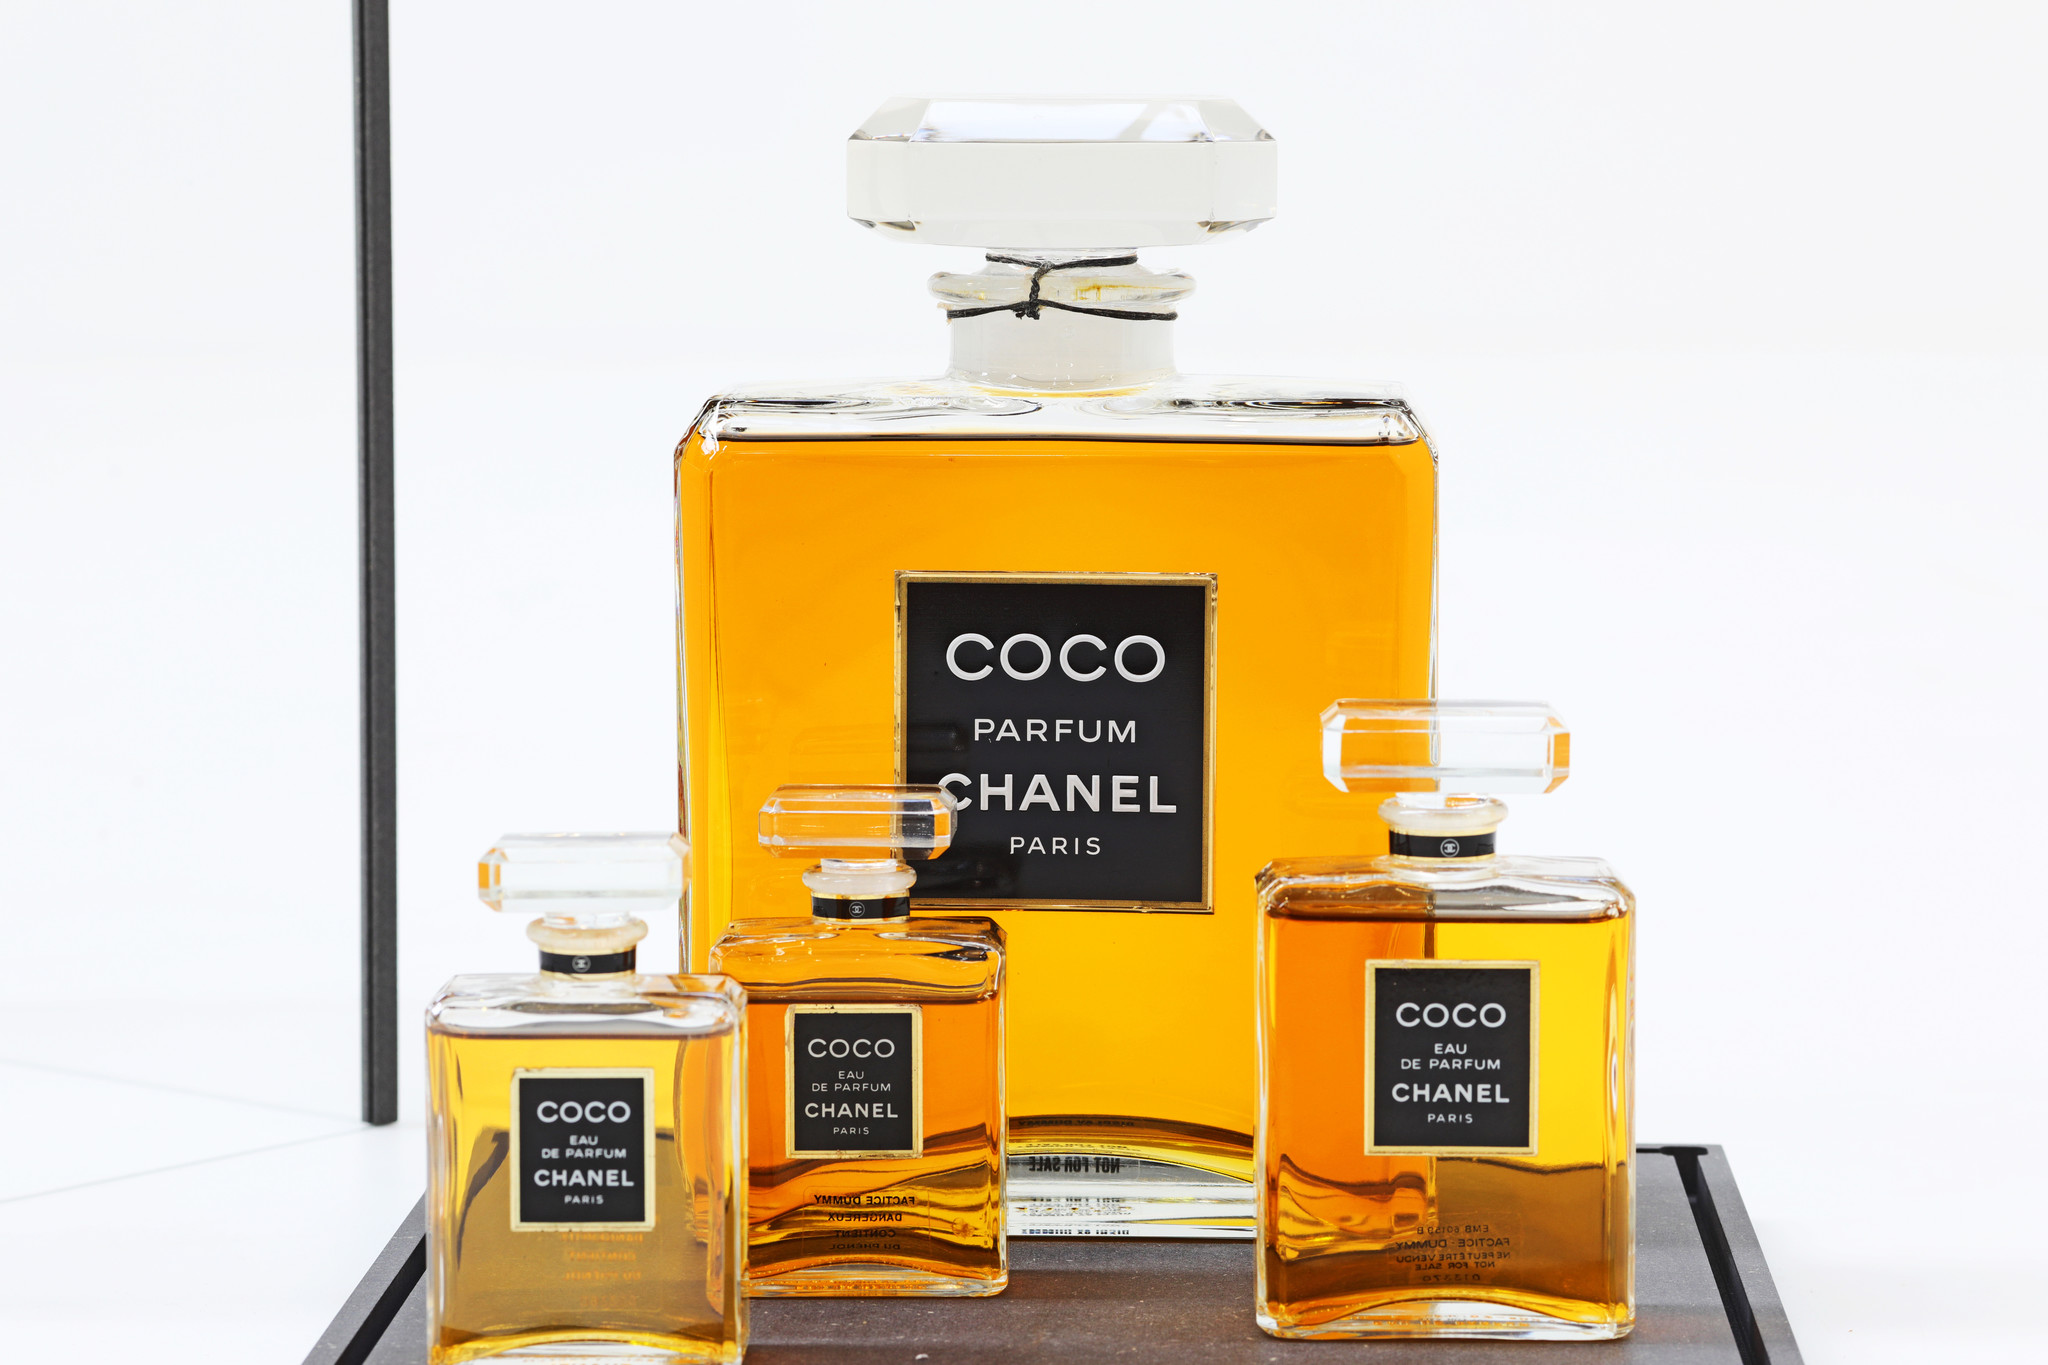 Buy Chanel Coco Chanel 100ml Eau De Toilette Spray Online at